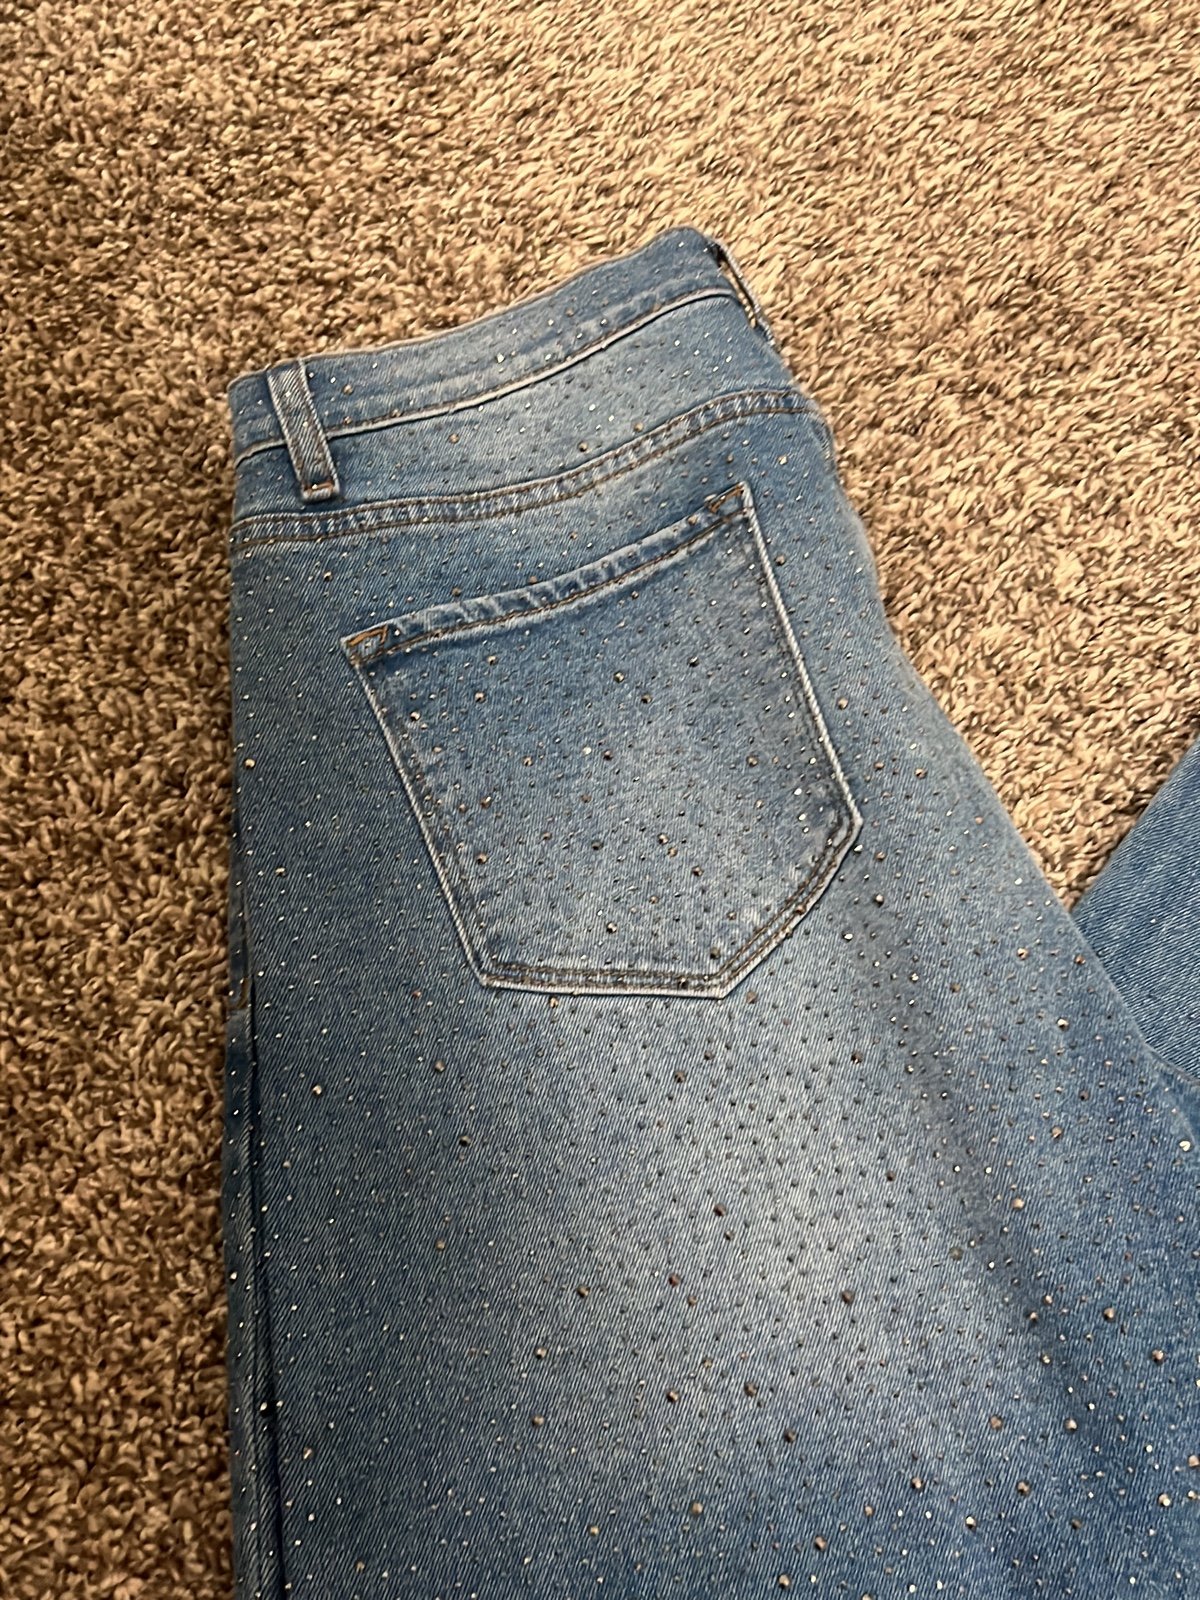 Beautiful Jeans ocN96f5t3 Buying Cheap